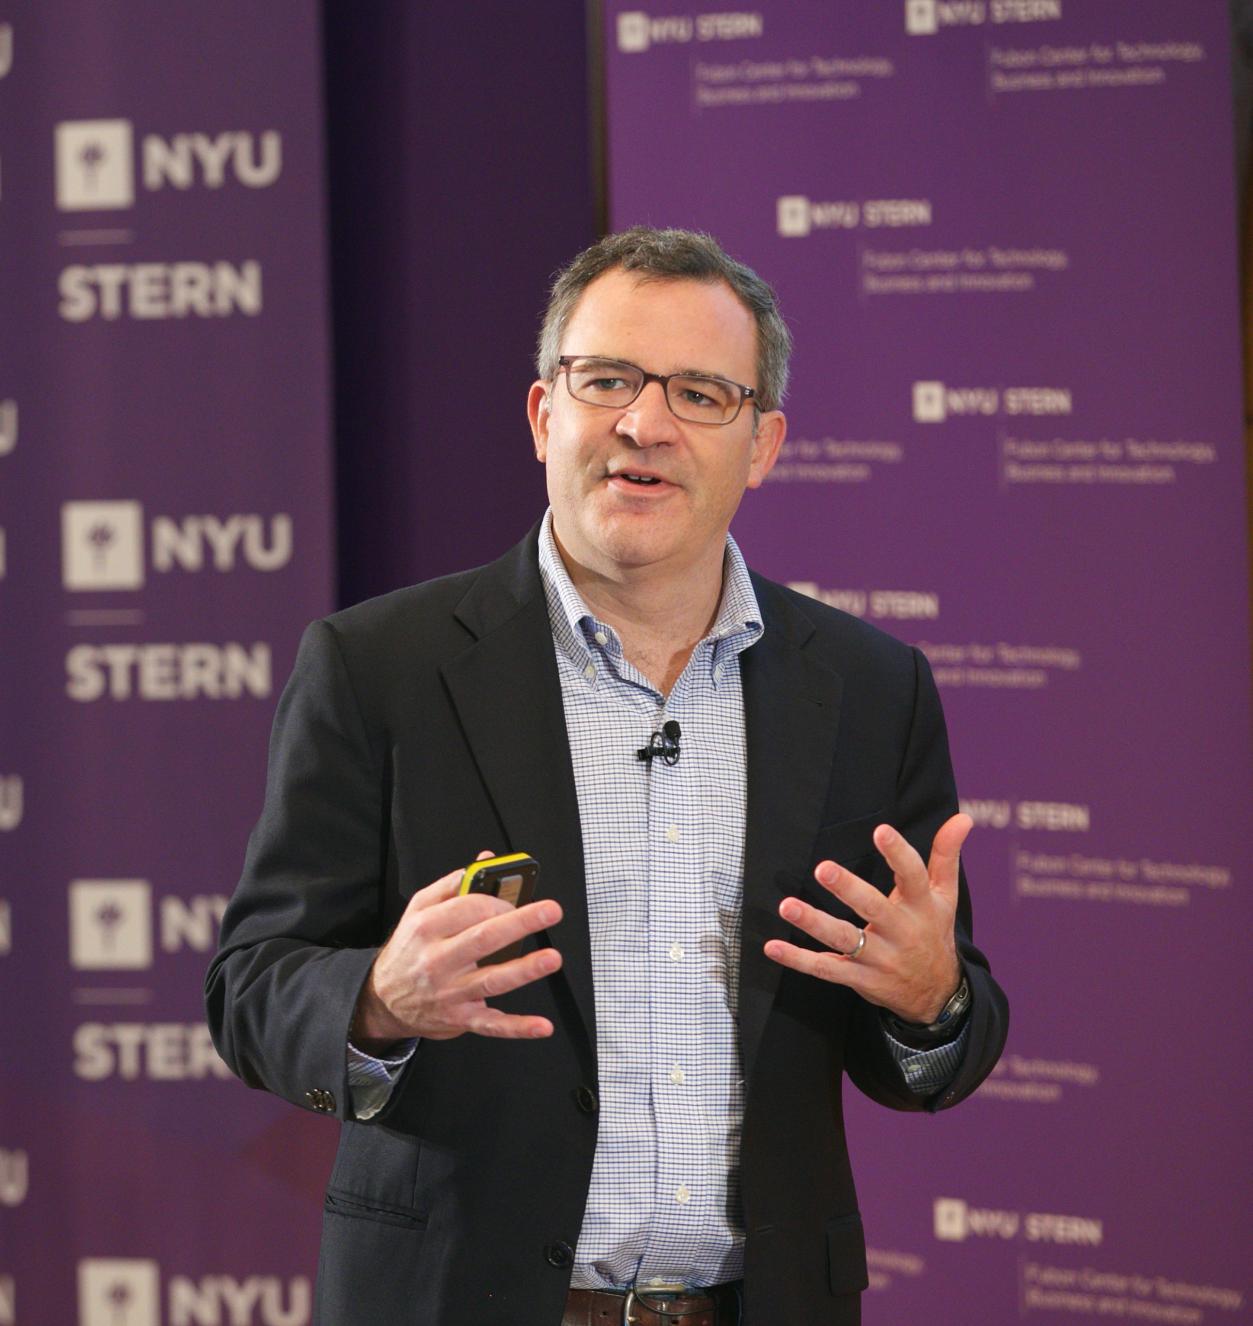 Matt Harris presents at NYU Stern FinTech Conference